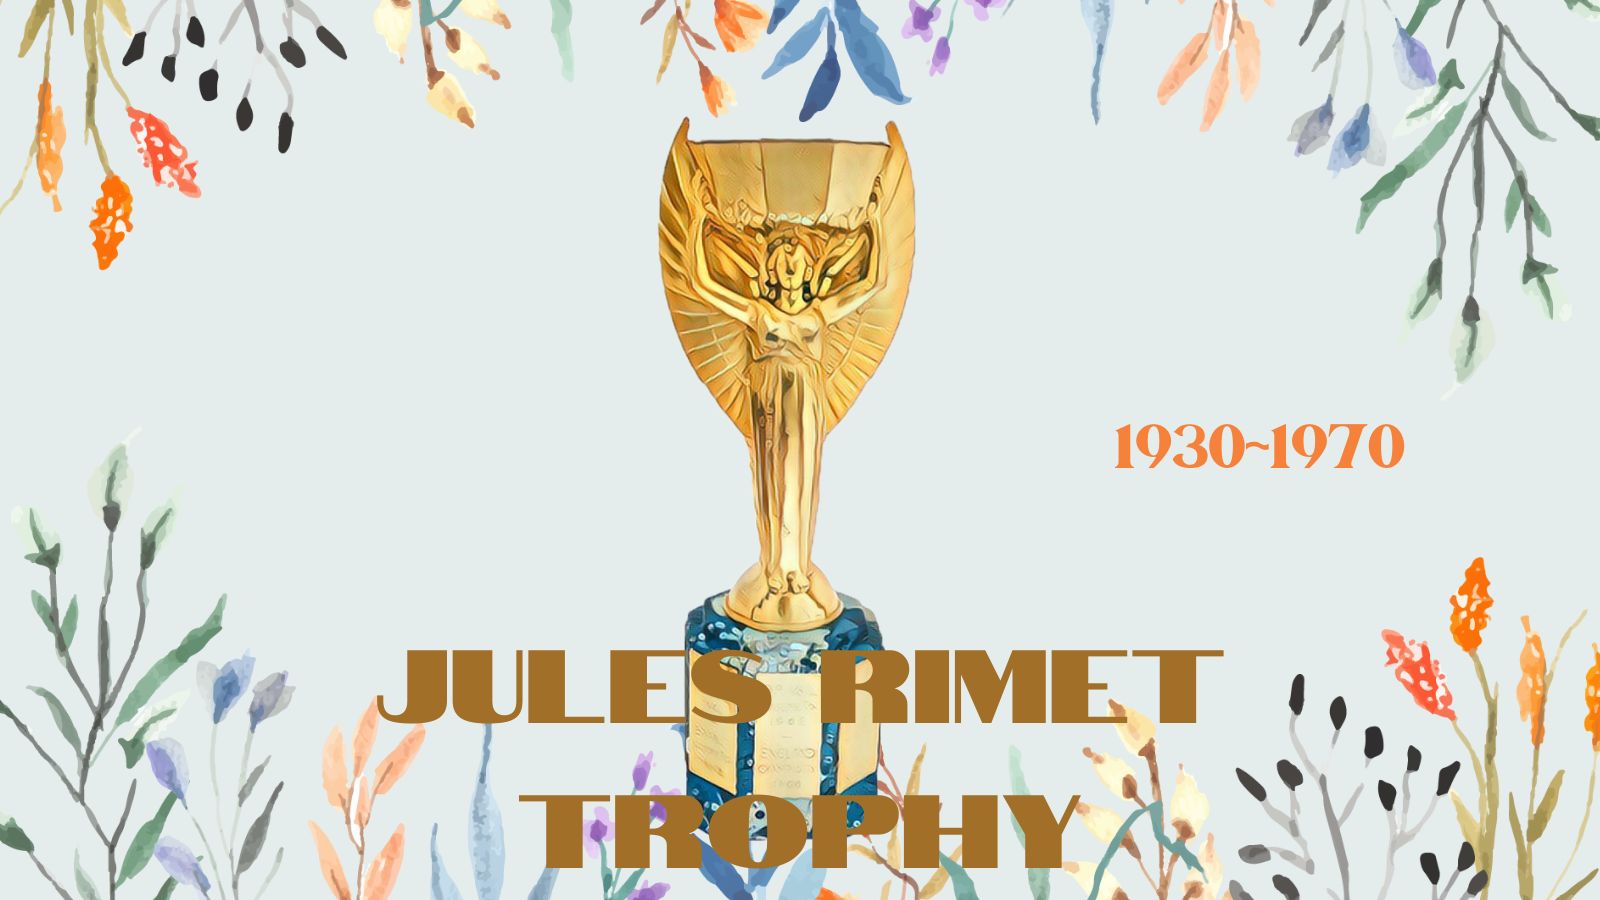 FIFA World Cup Trophy Jules Rimet Trophy 1930-1970